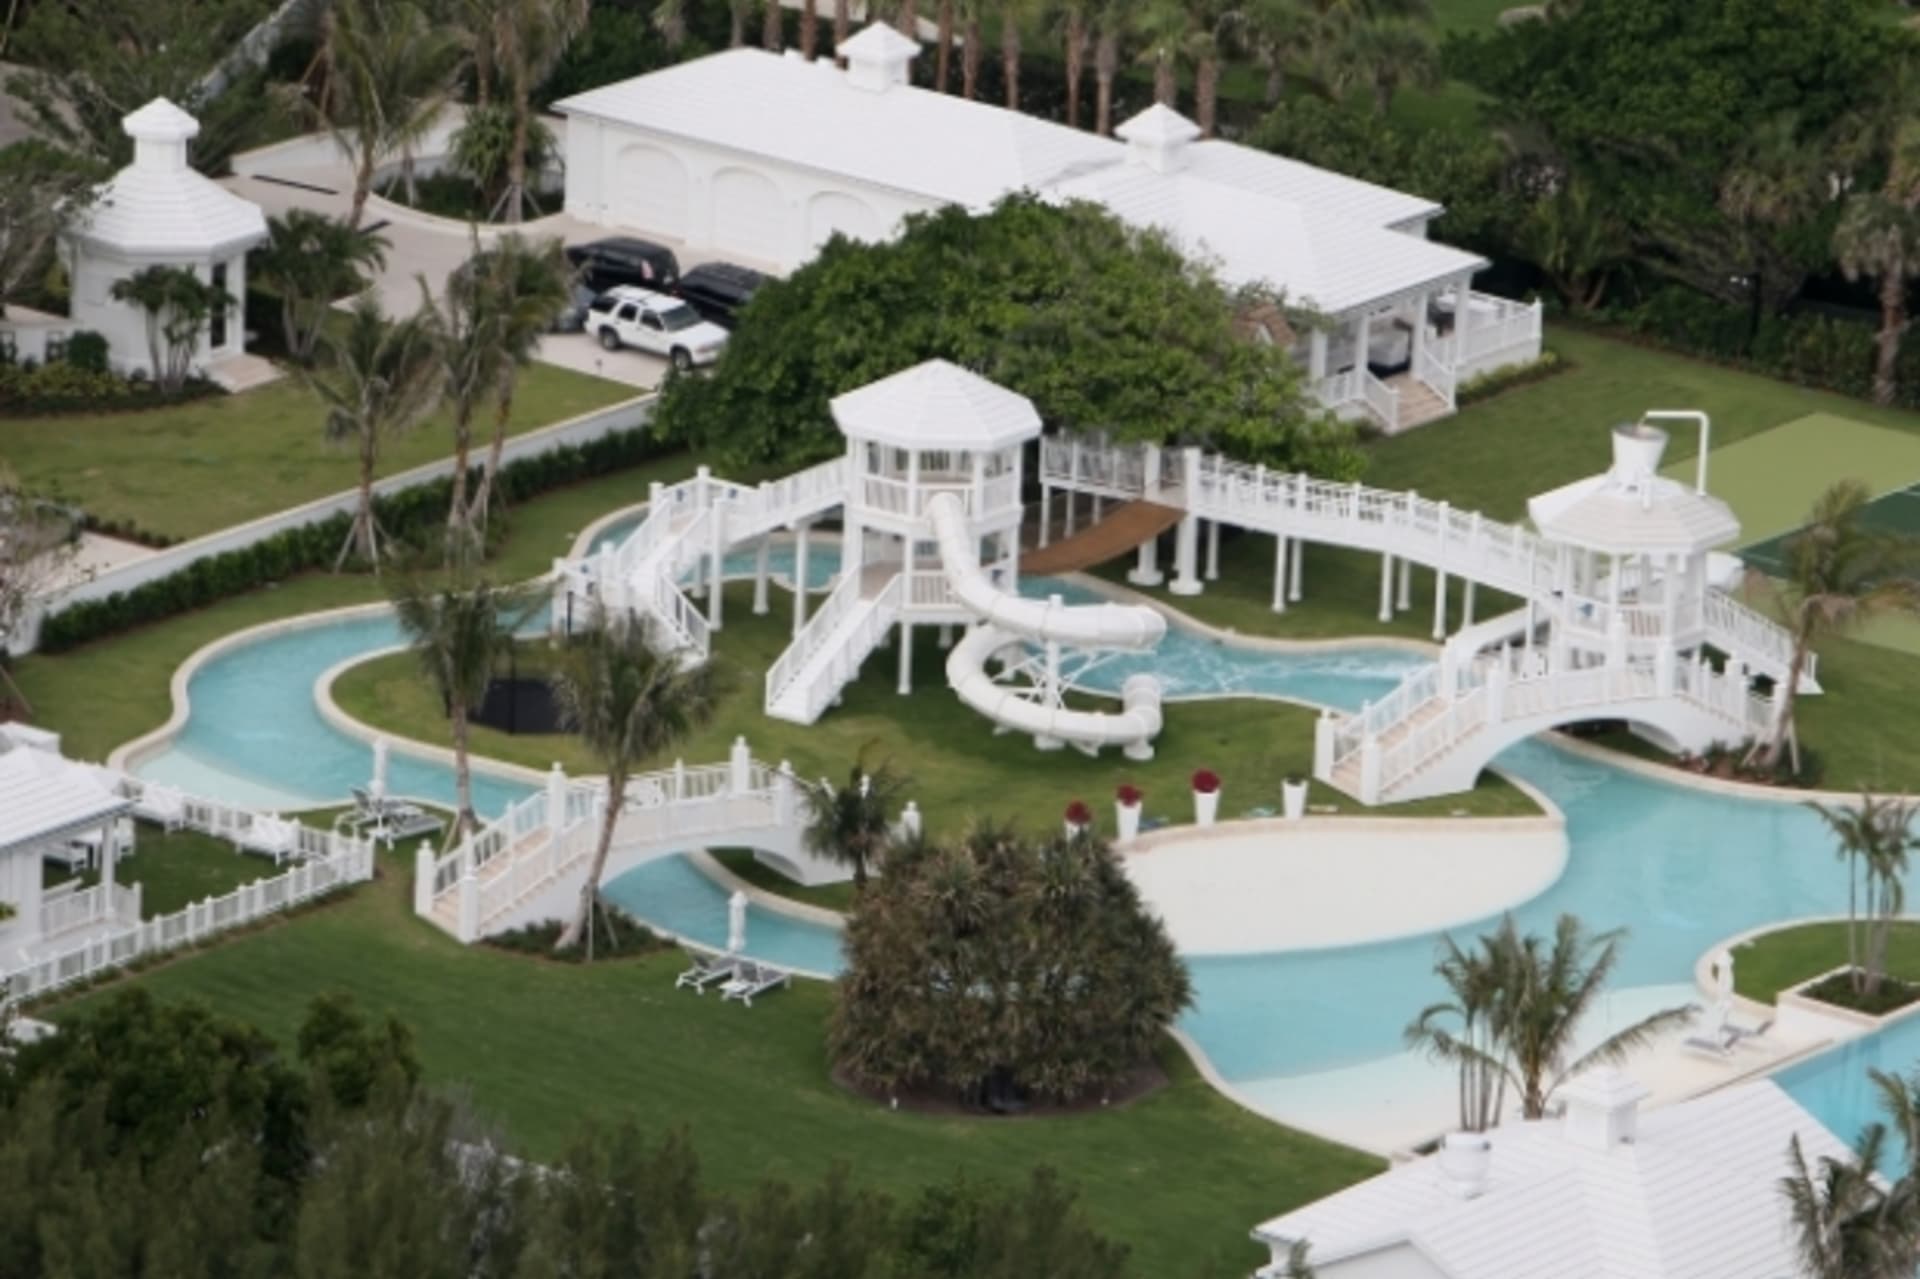 Za aquapark pro dvojčata zaplatila Céline Dion v přepočtu 400 milionů korun